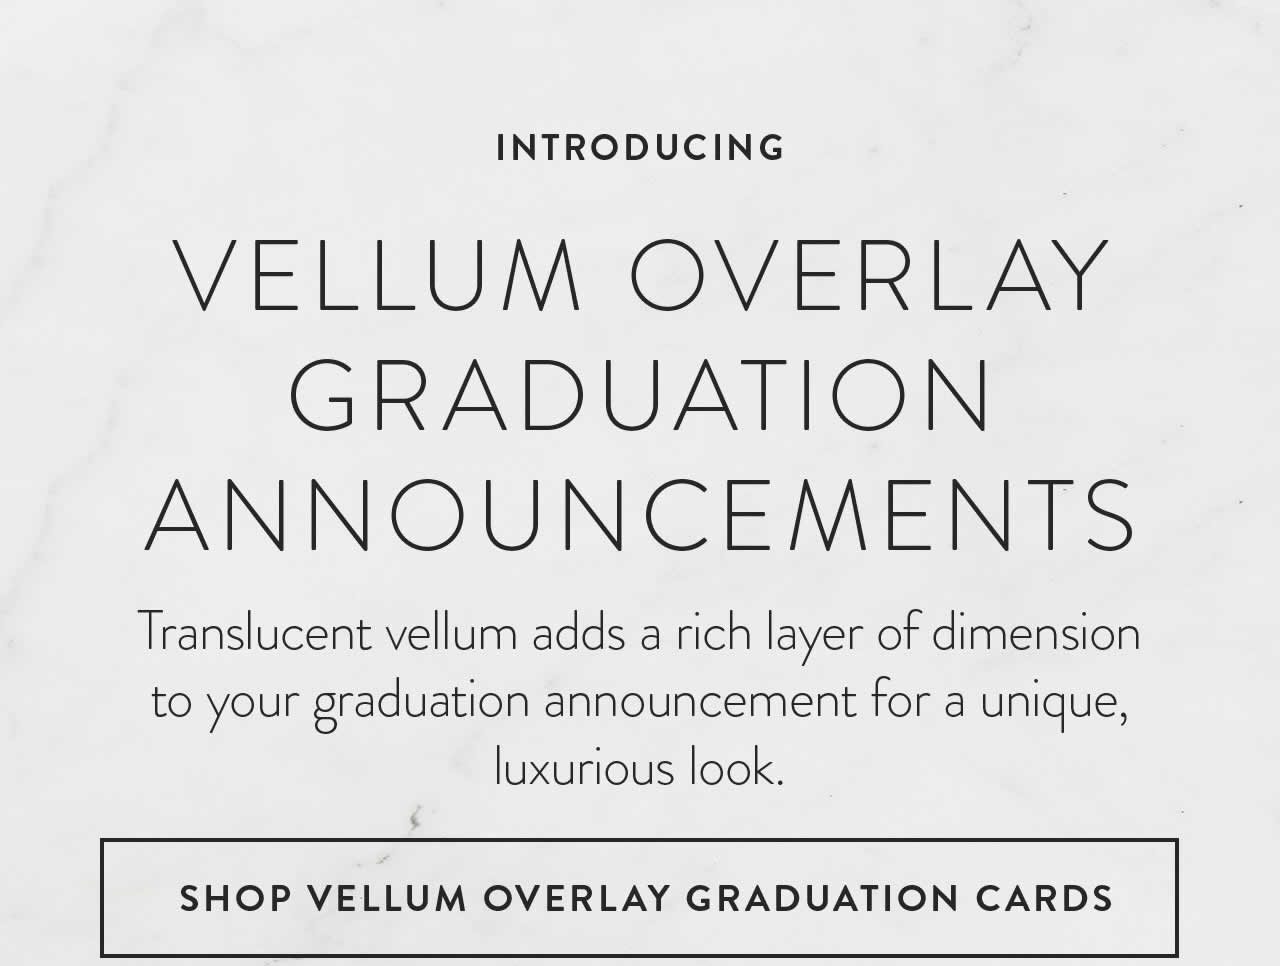 Shop Vellum OverlayGraduation Cards